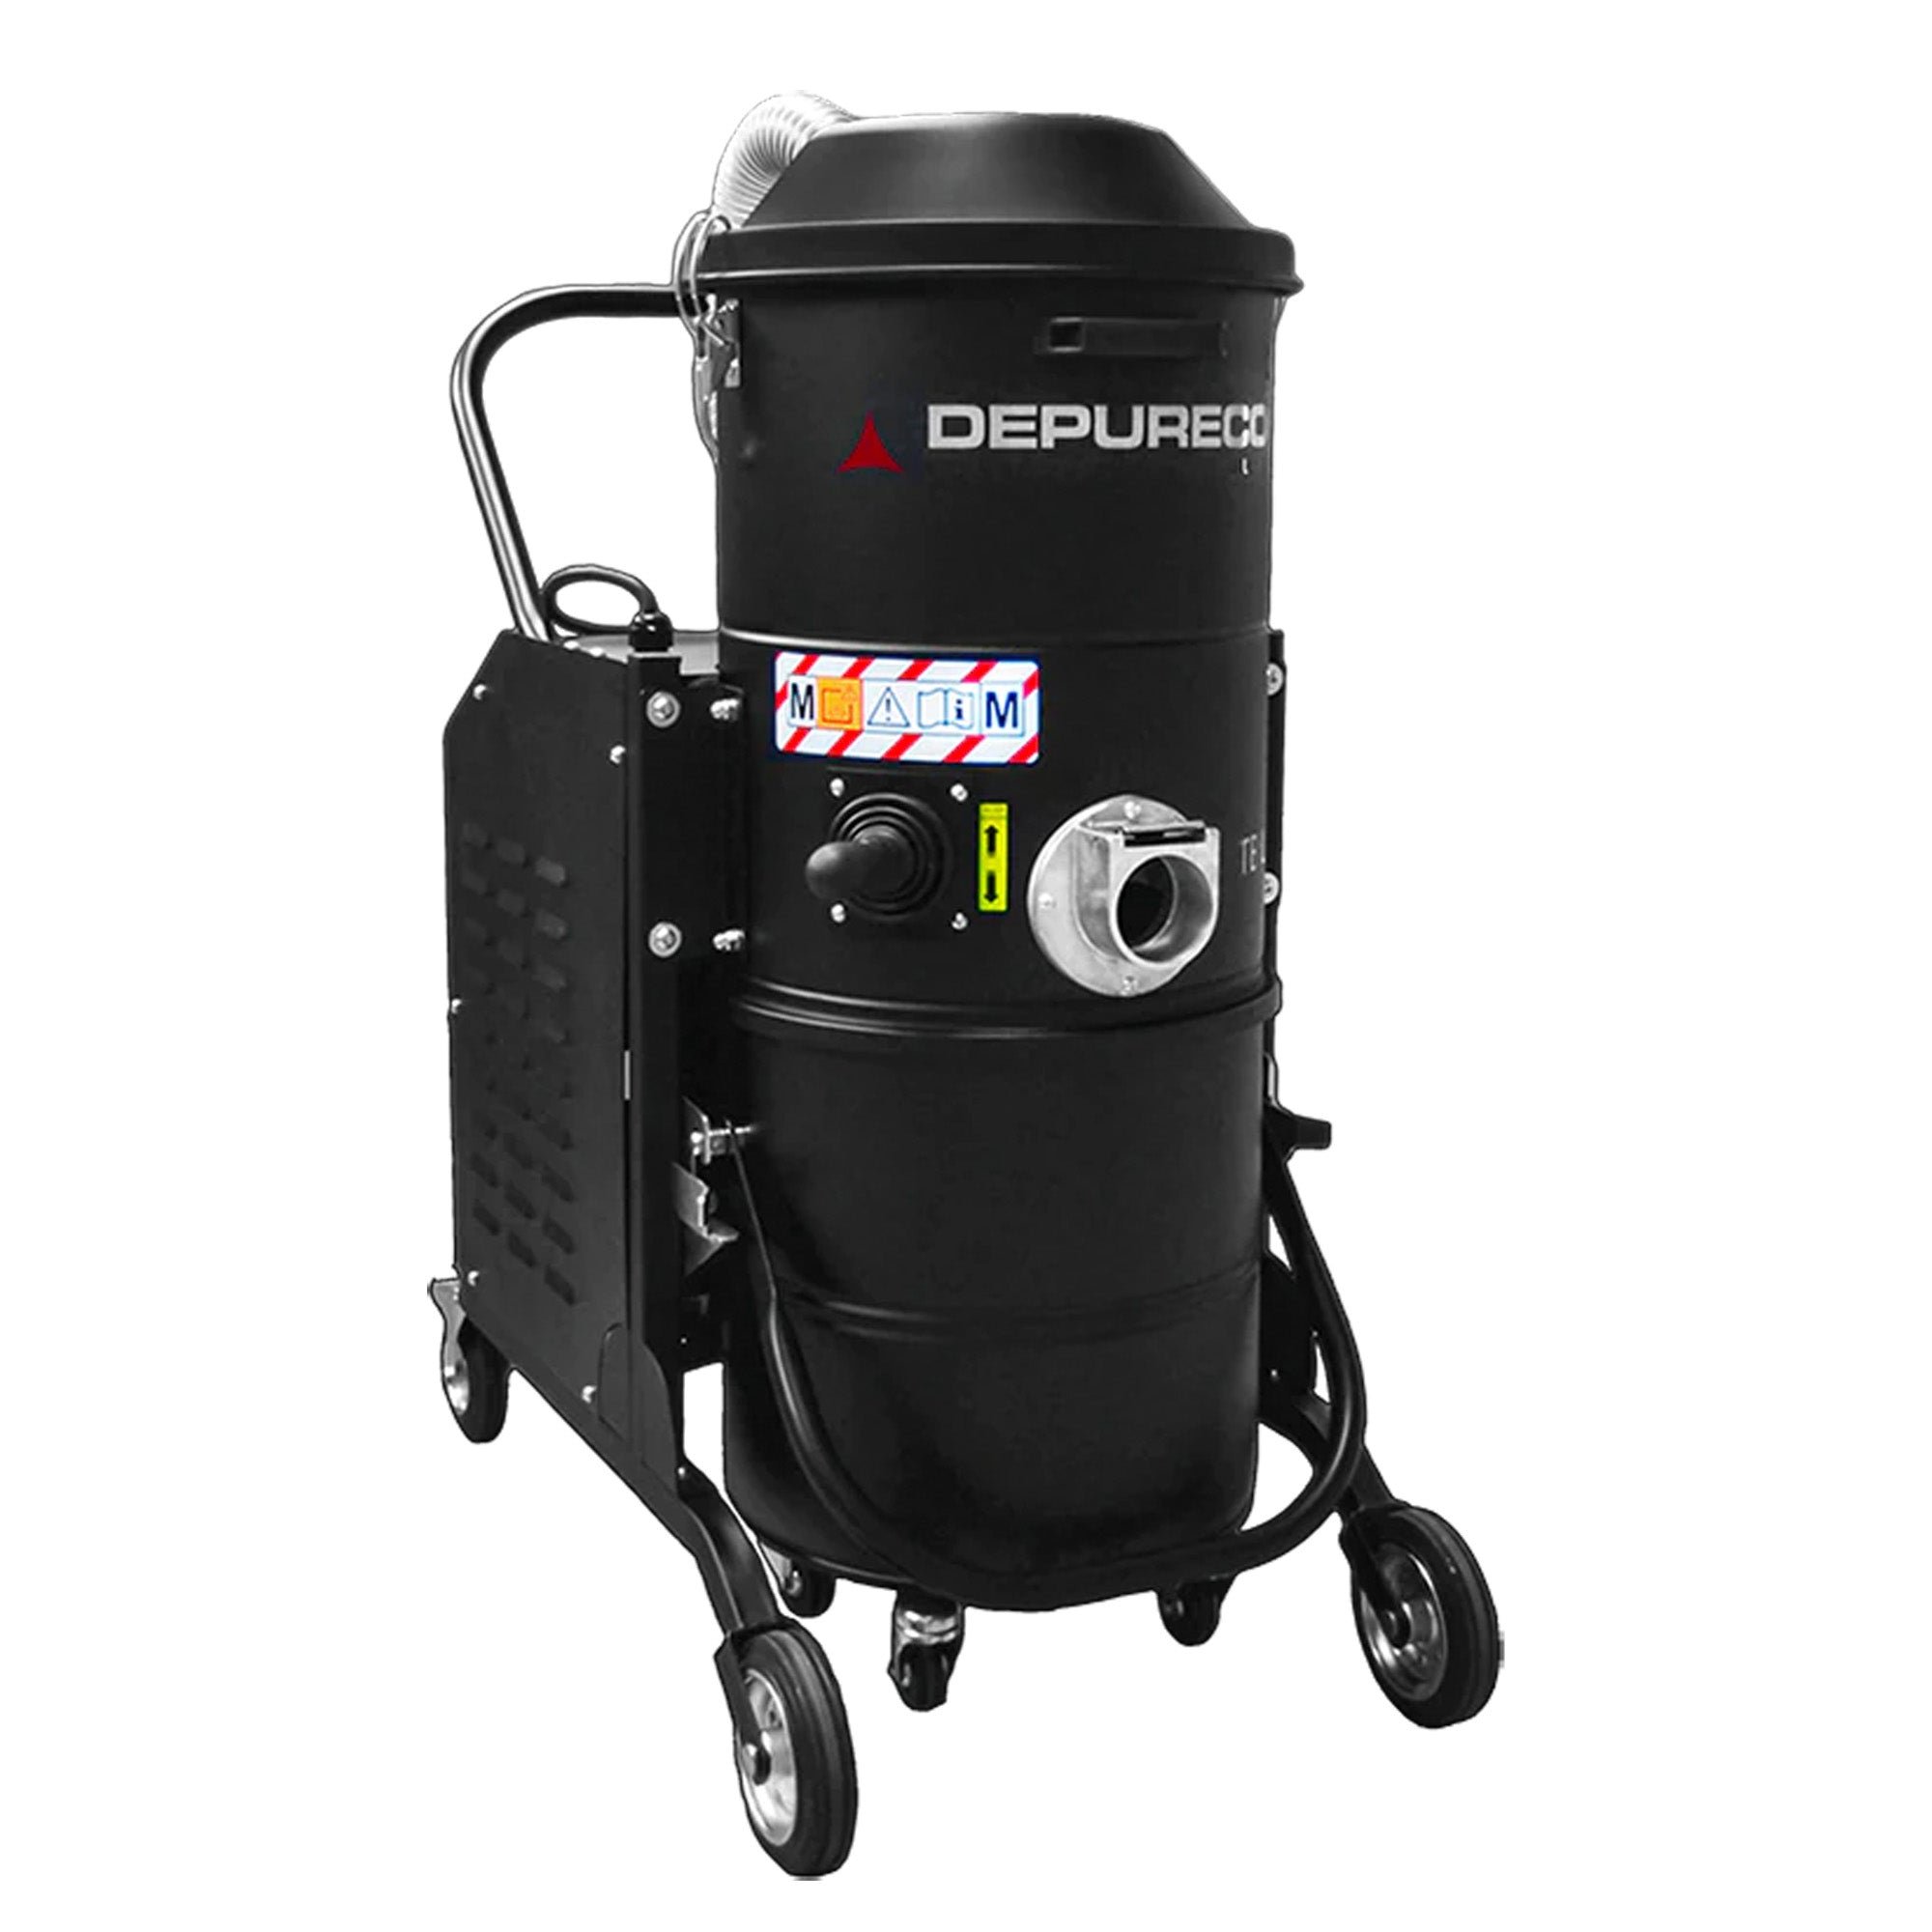 Depureco TB UP M Three-Phase Industrial Vacuum Cleaner